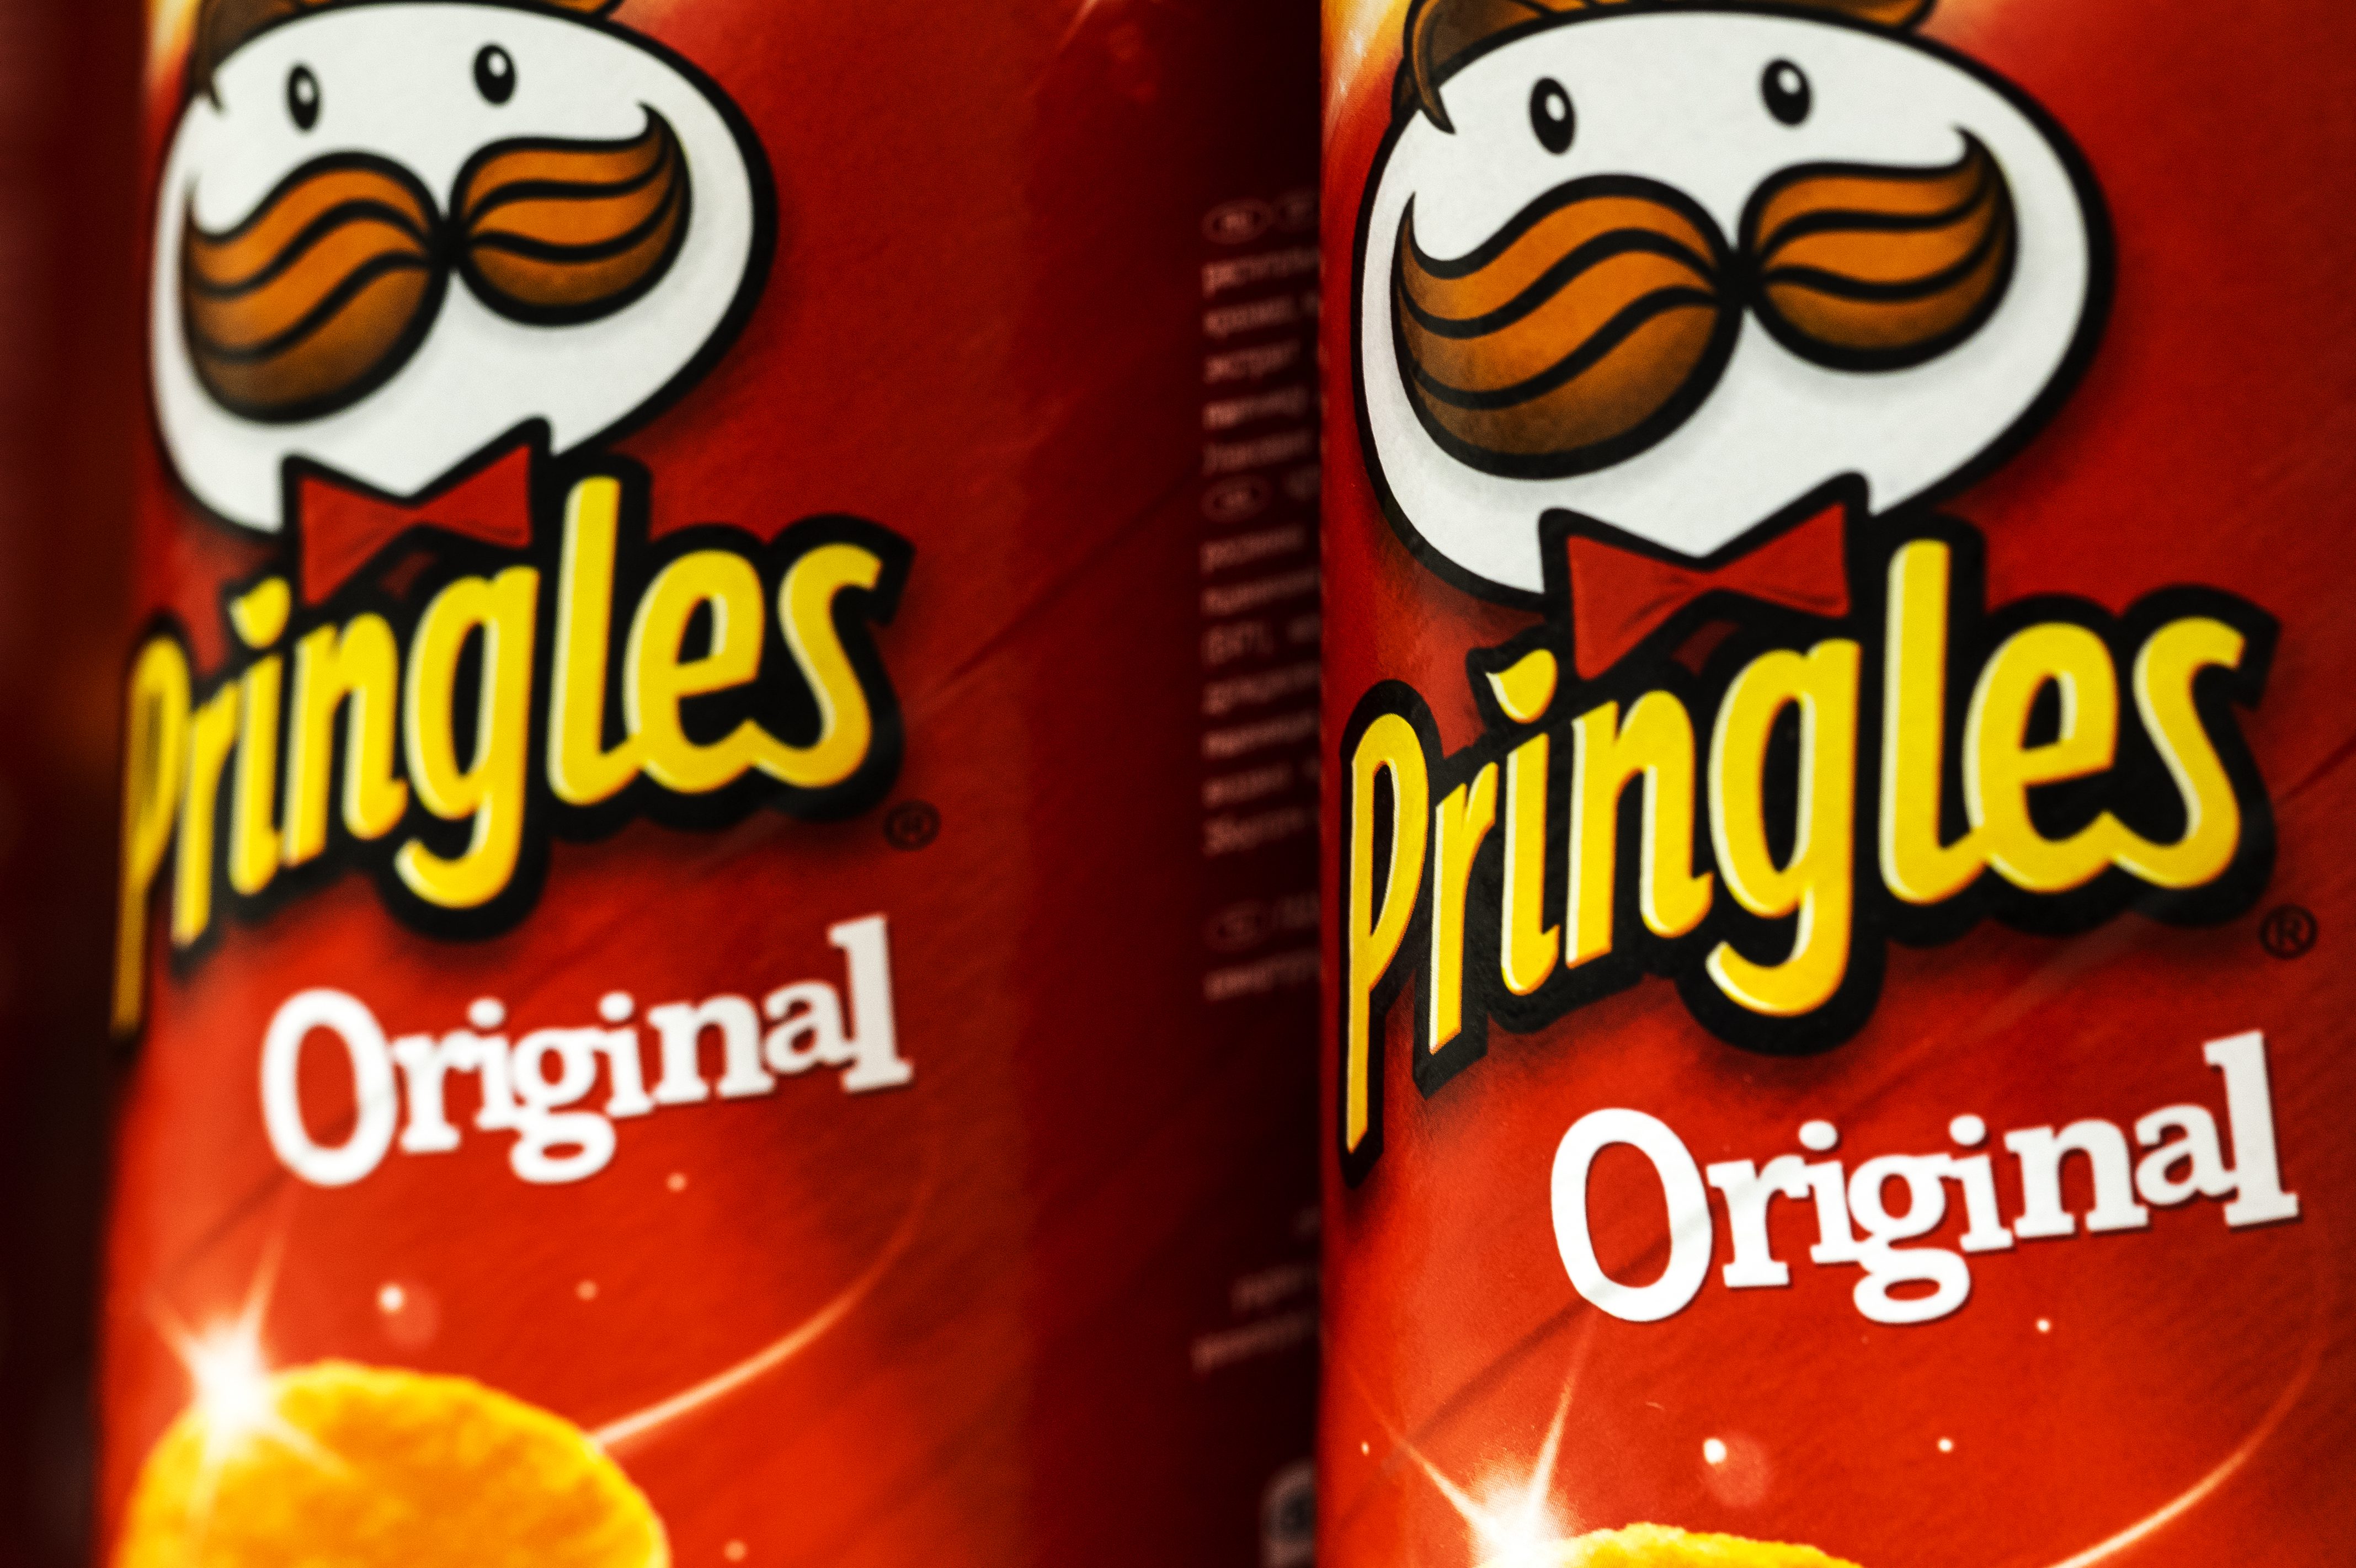 Pringles' Newest Flavors, Ranked